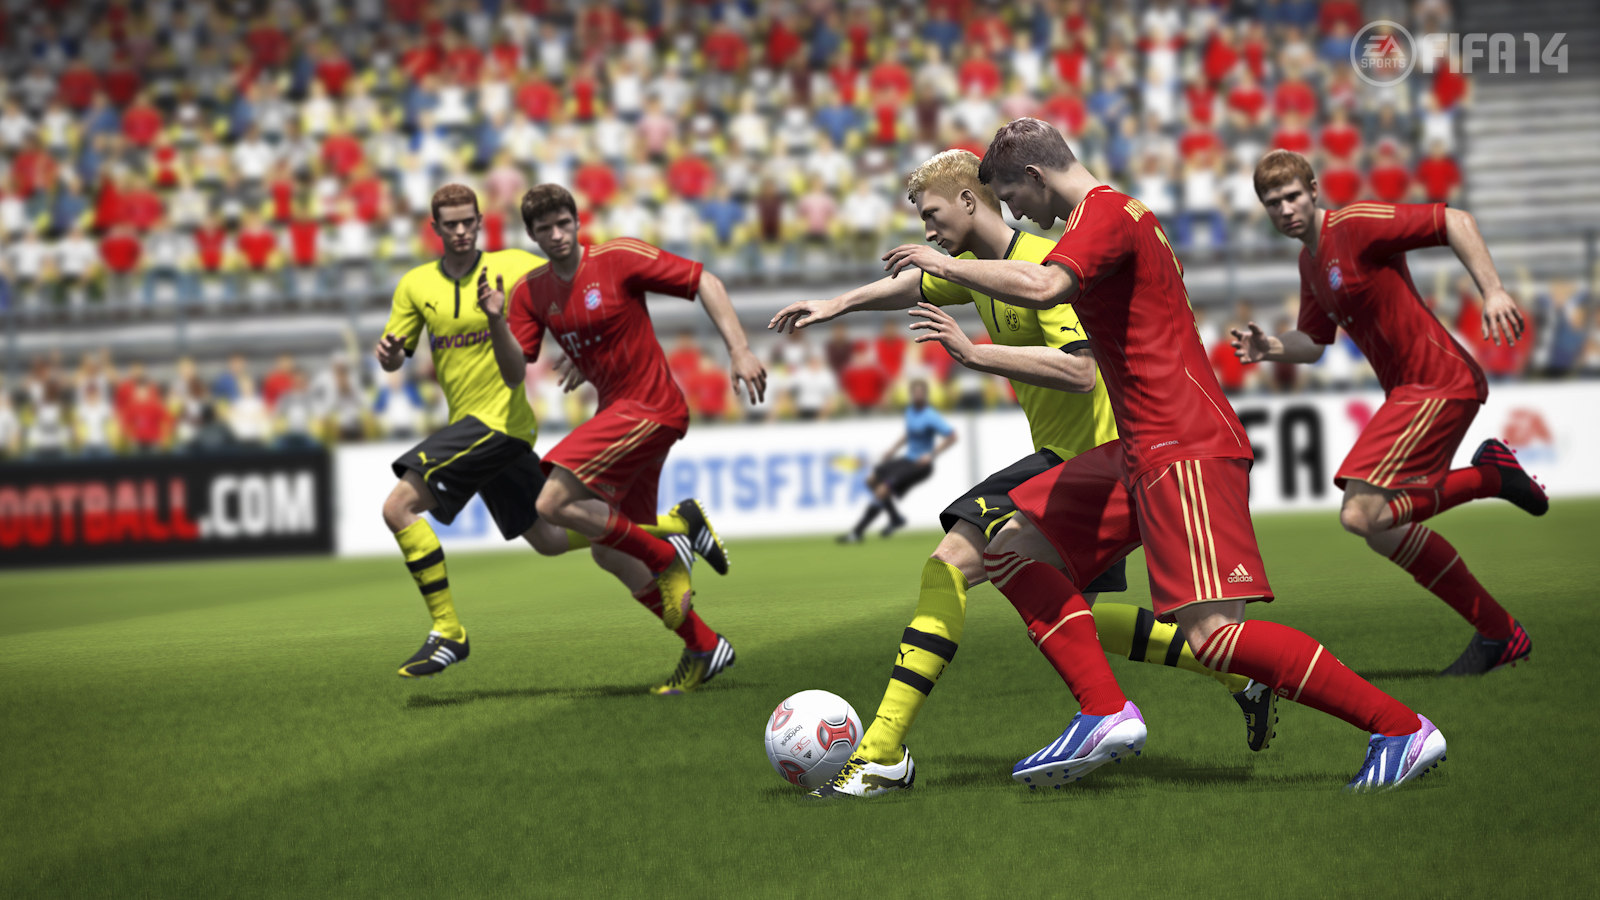 Jogo PC FIFA Soccer 14